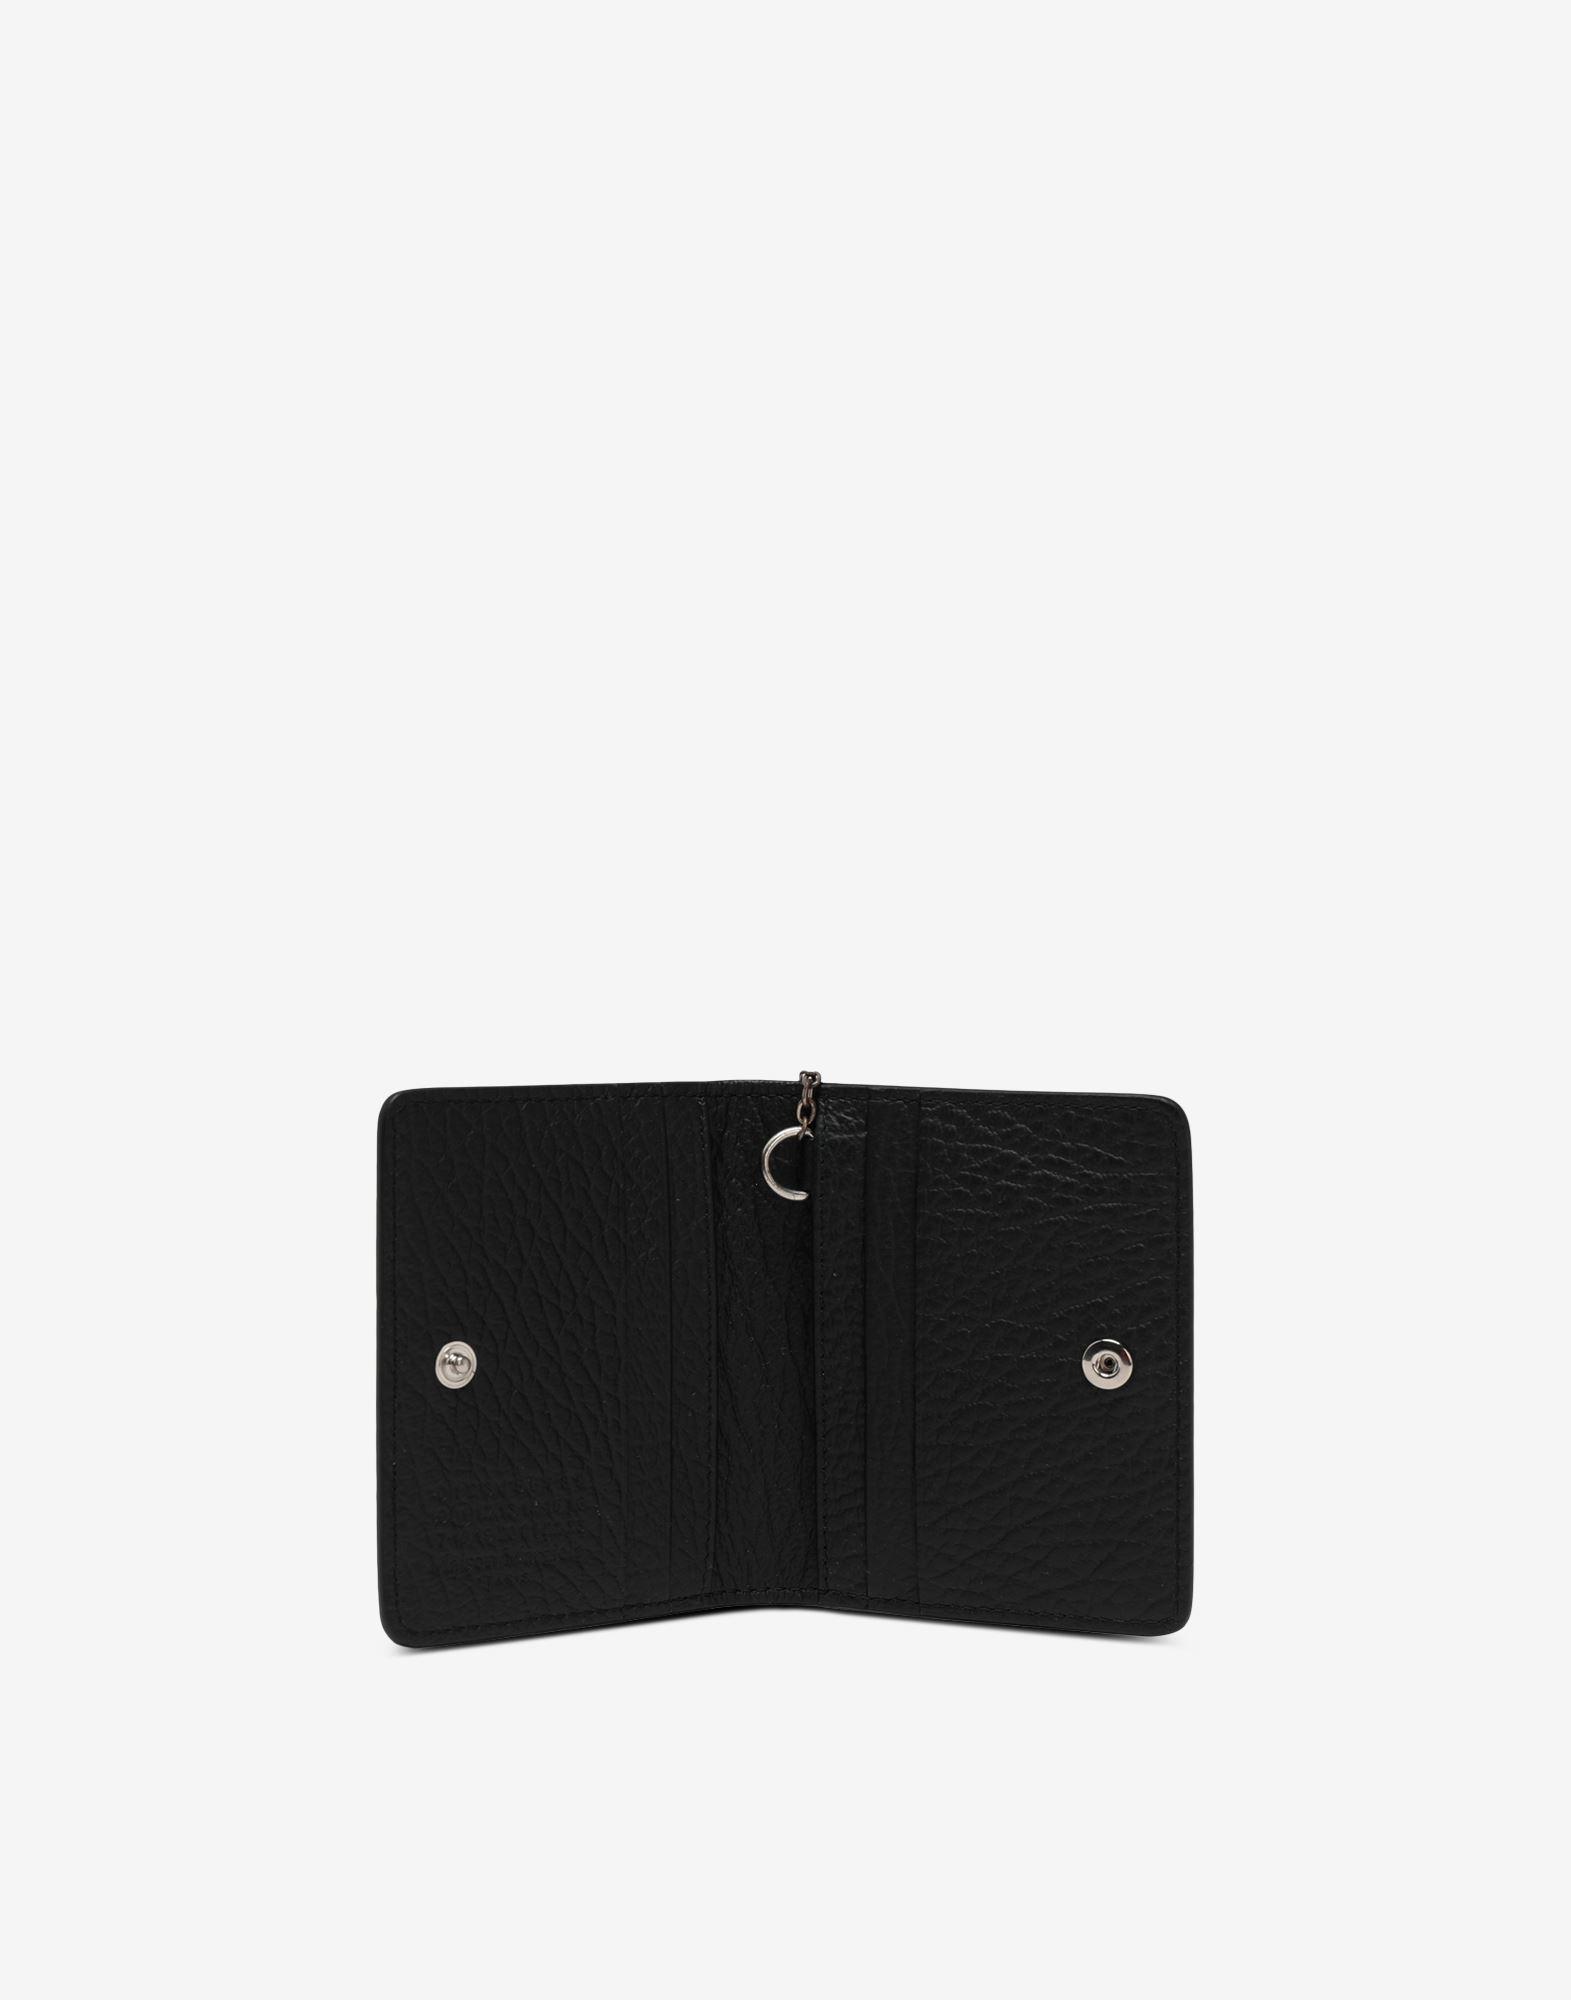 Maison Margiela Leather Glam Slam Keyring Wallet in Black - Lyst